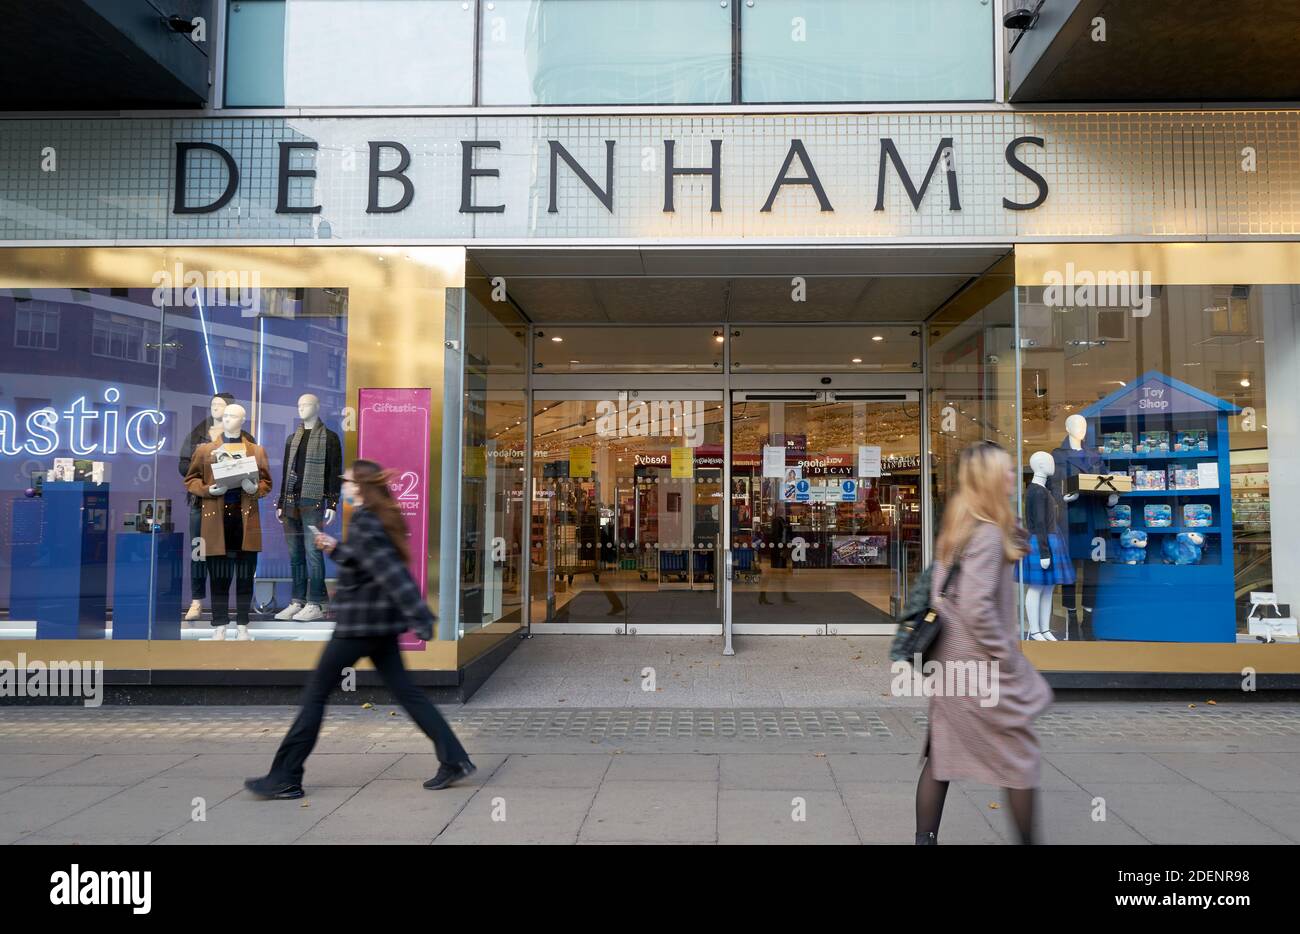 debenhams department store oxford street Stock Photo